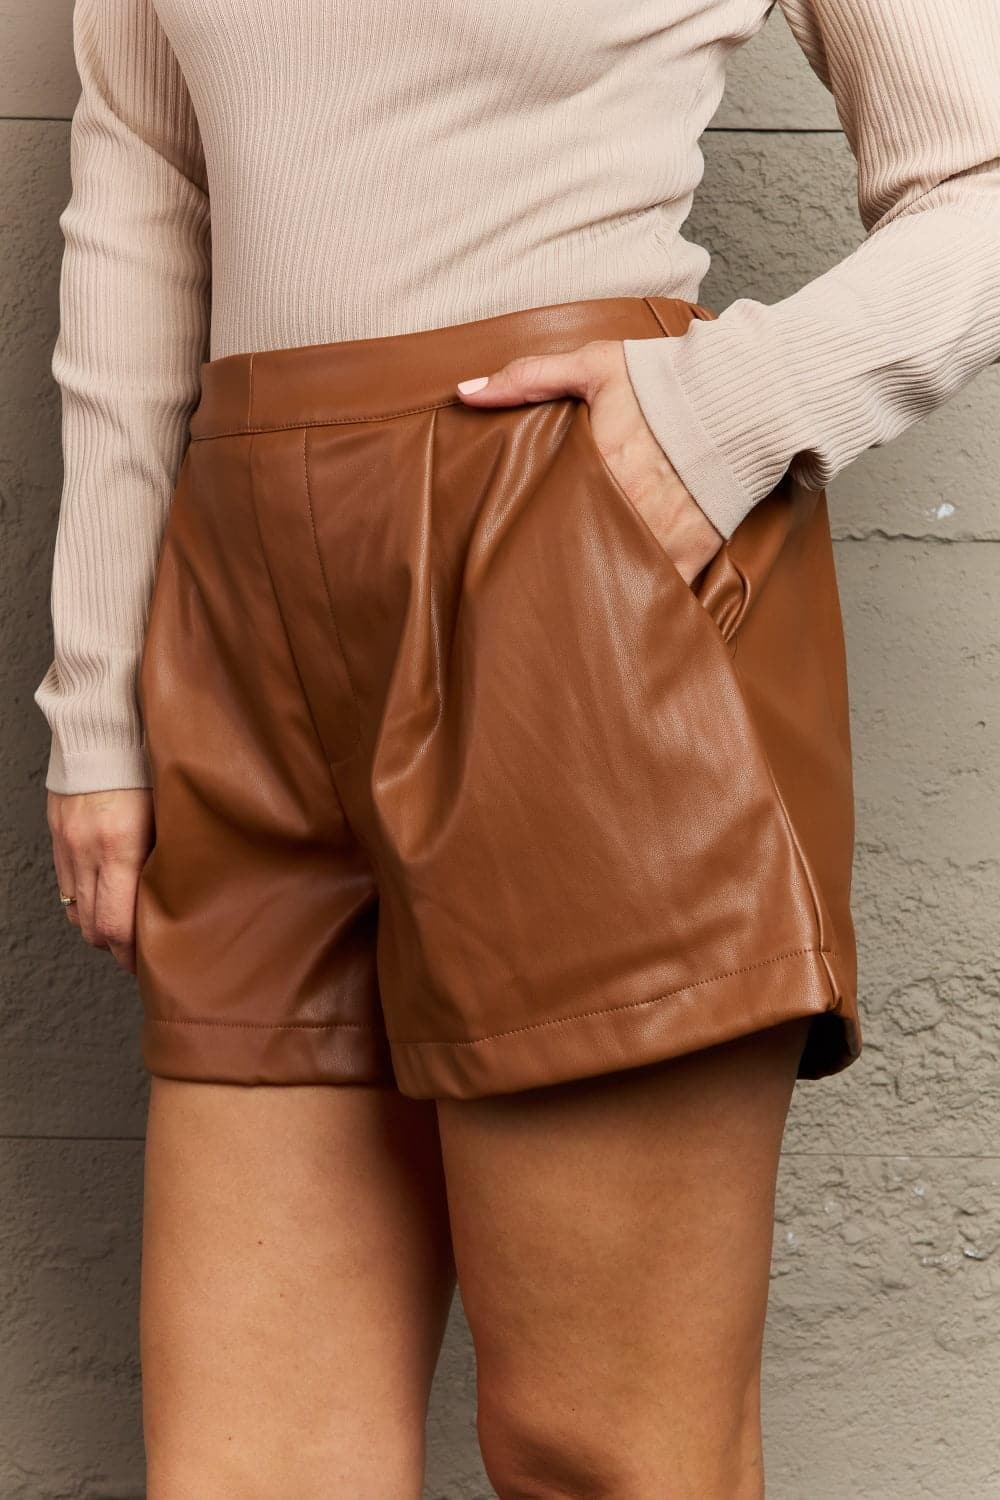 HEYSON Leather Baby Full Size High Waist Vegan Leather Shorts - SwagglyLife Home & Fashion